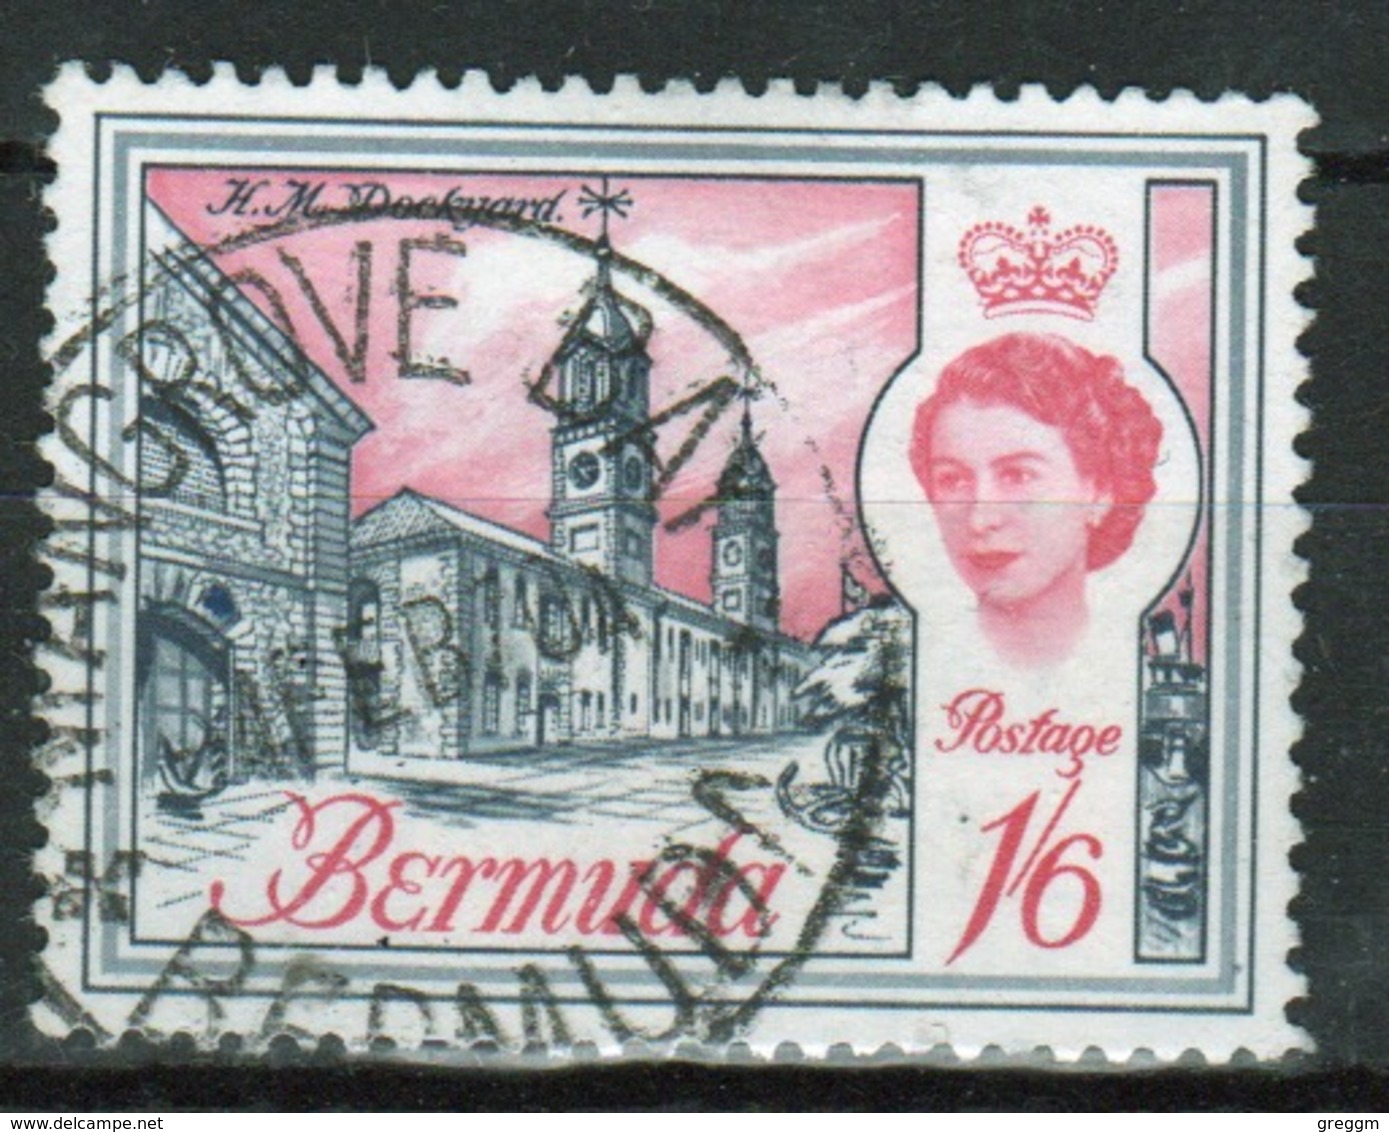 Bermuda Elizabeth II 1962 Single 1/6d Stamp From The Definitive Set. - Bermuda